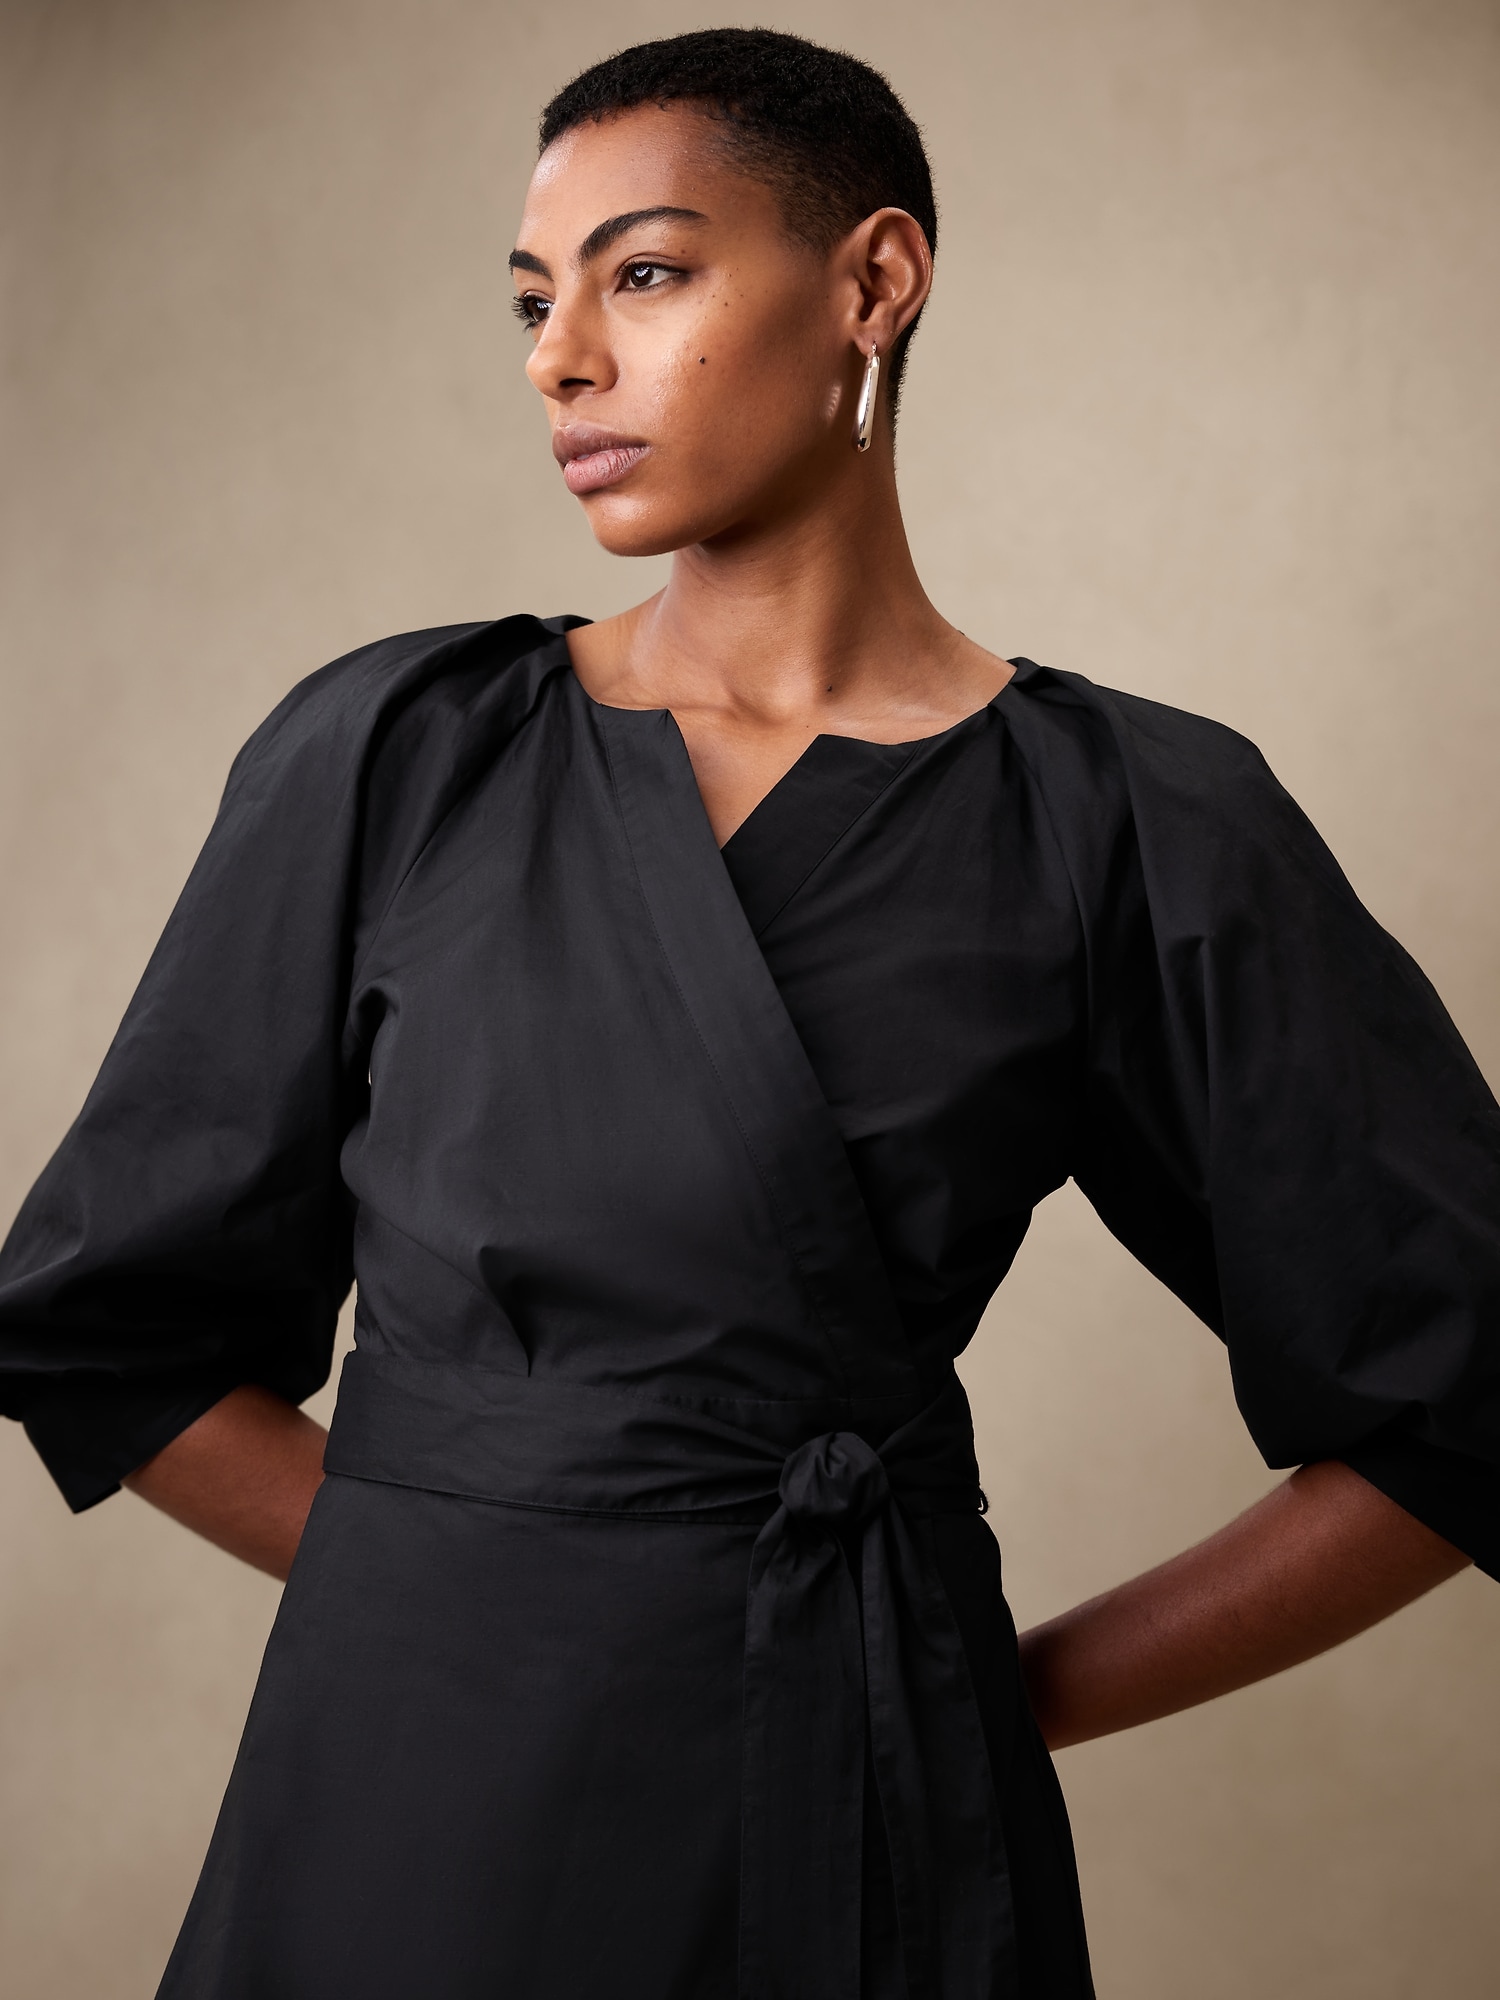 Blouson-Sleeve Midi Dress